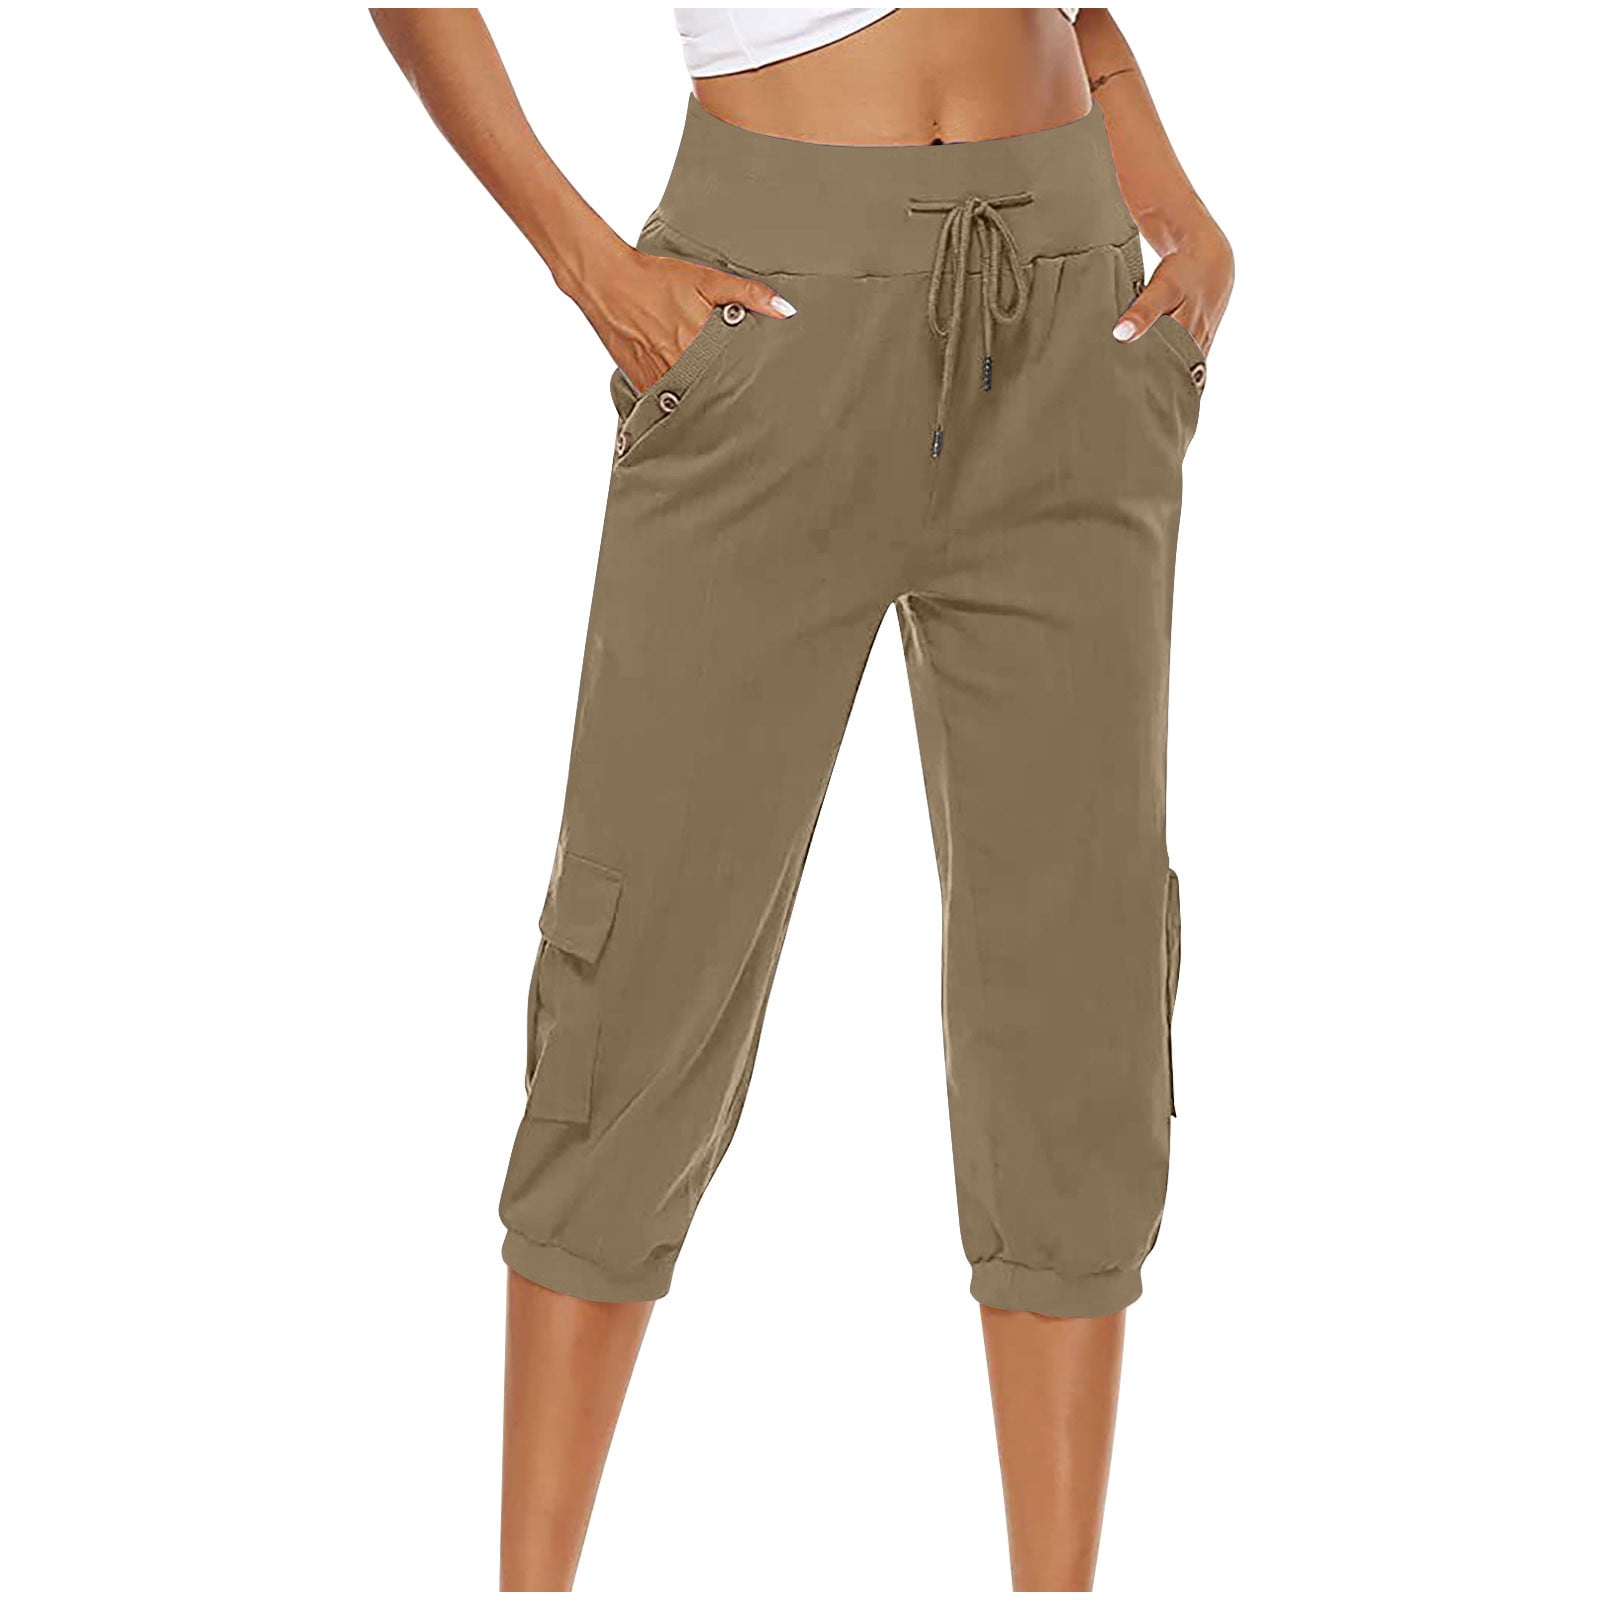 Womens Capris - Walmart.com  Capri pants, Womens capris, Pants